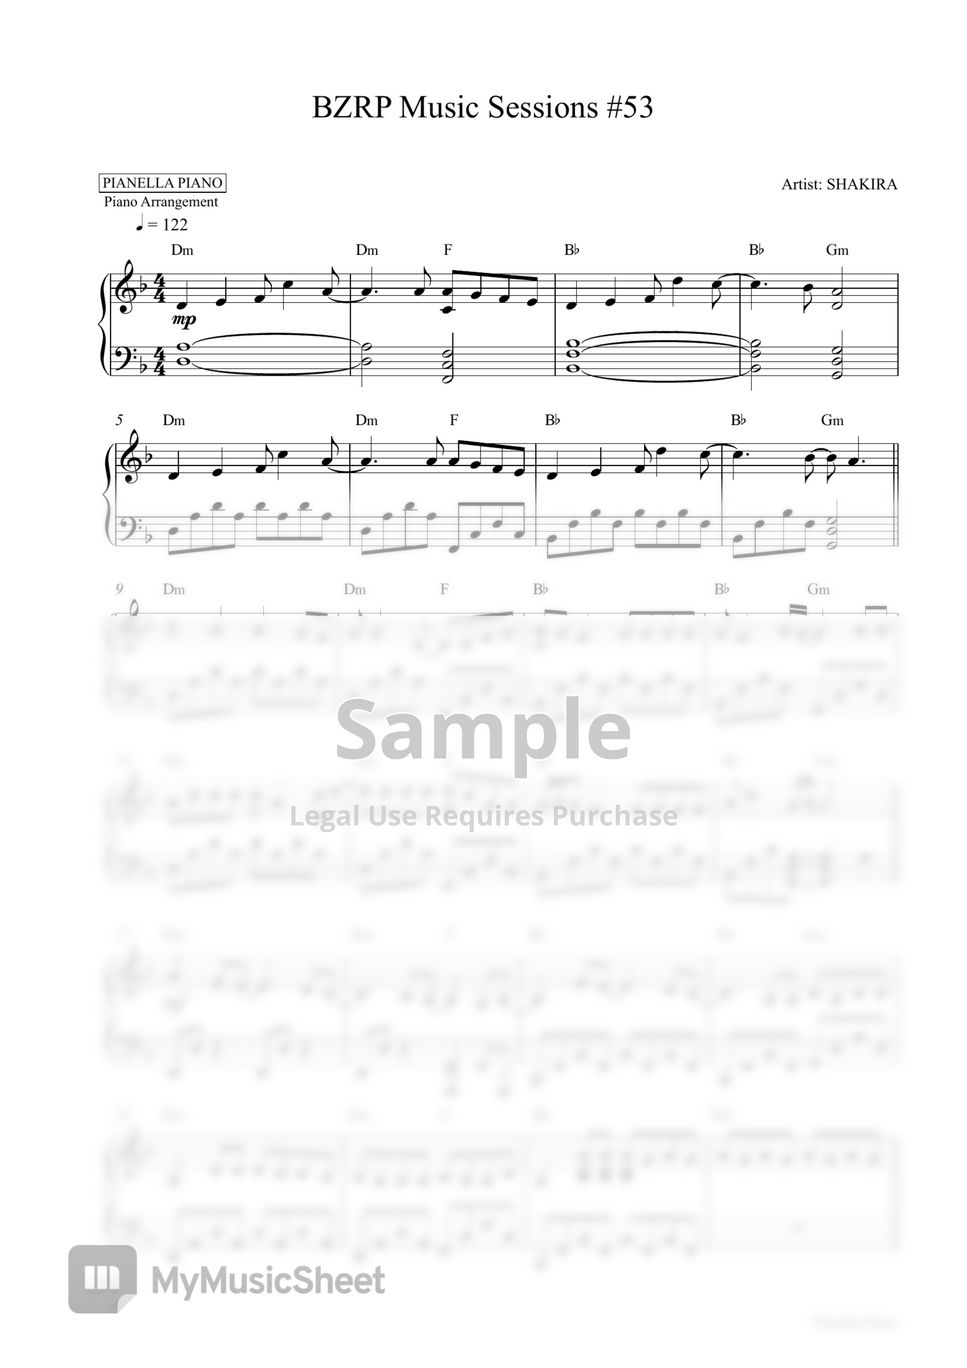 SHAKIRA - BZRP Music Sessions #53 (Piano Sheet) by Pianella Piano